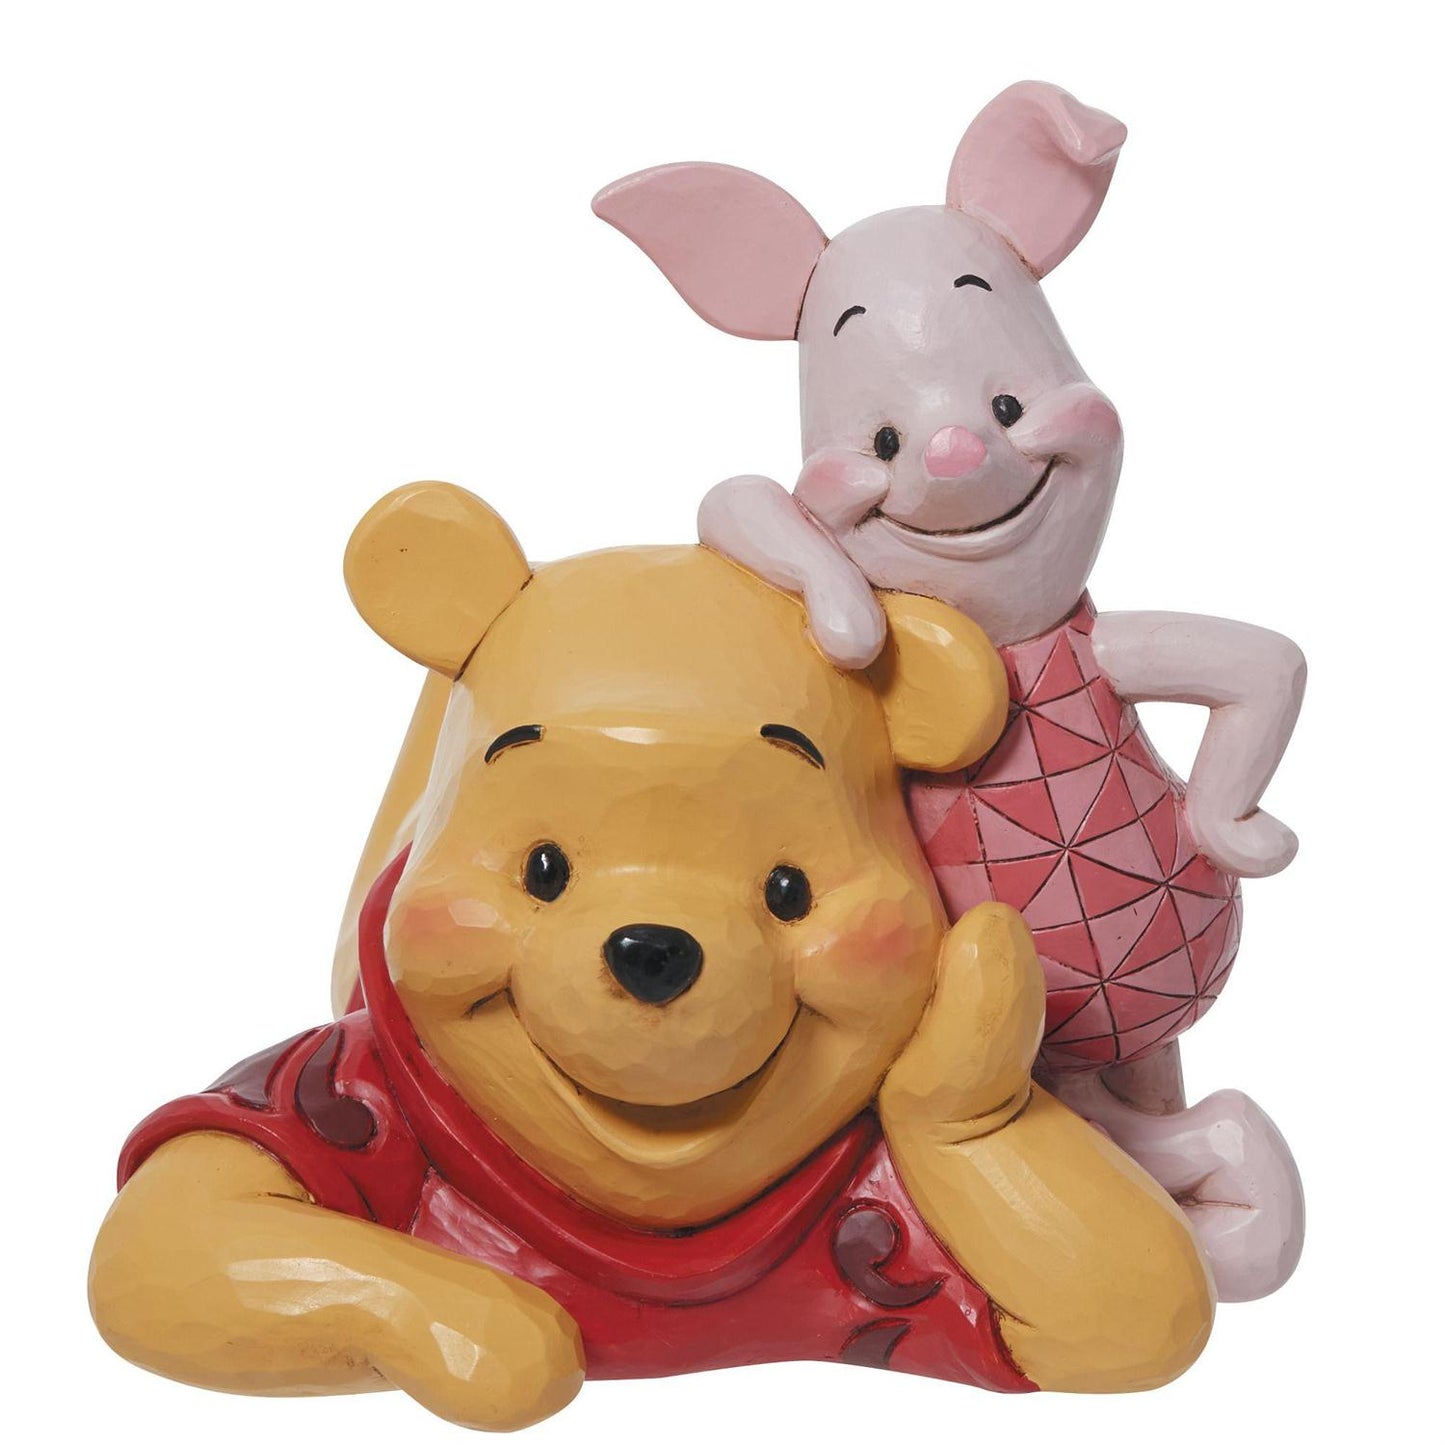 Jim Shore "Forever Friends" Pooh & Piglet